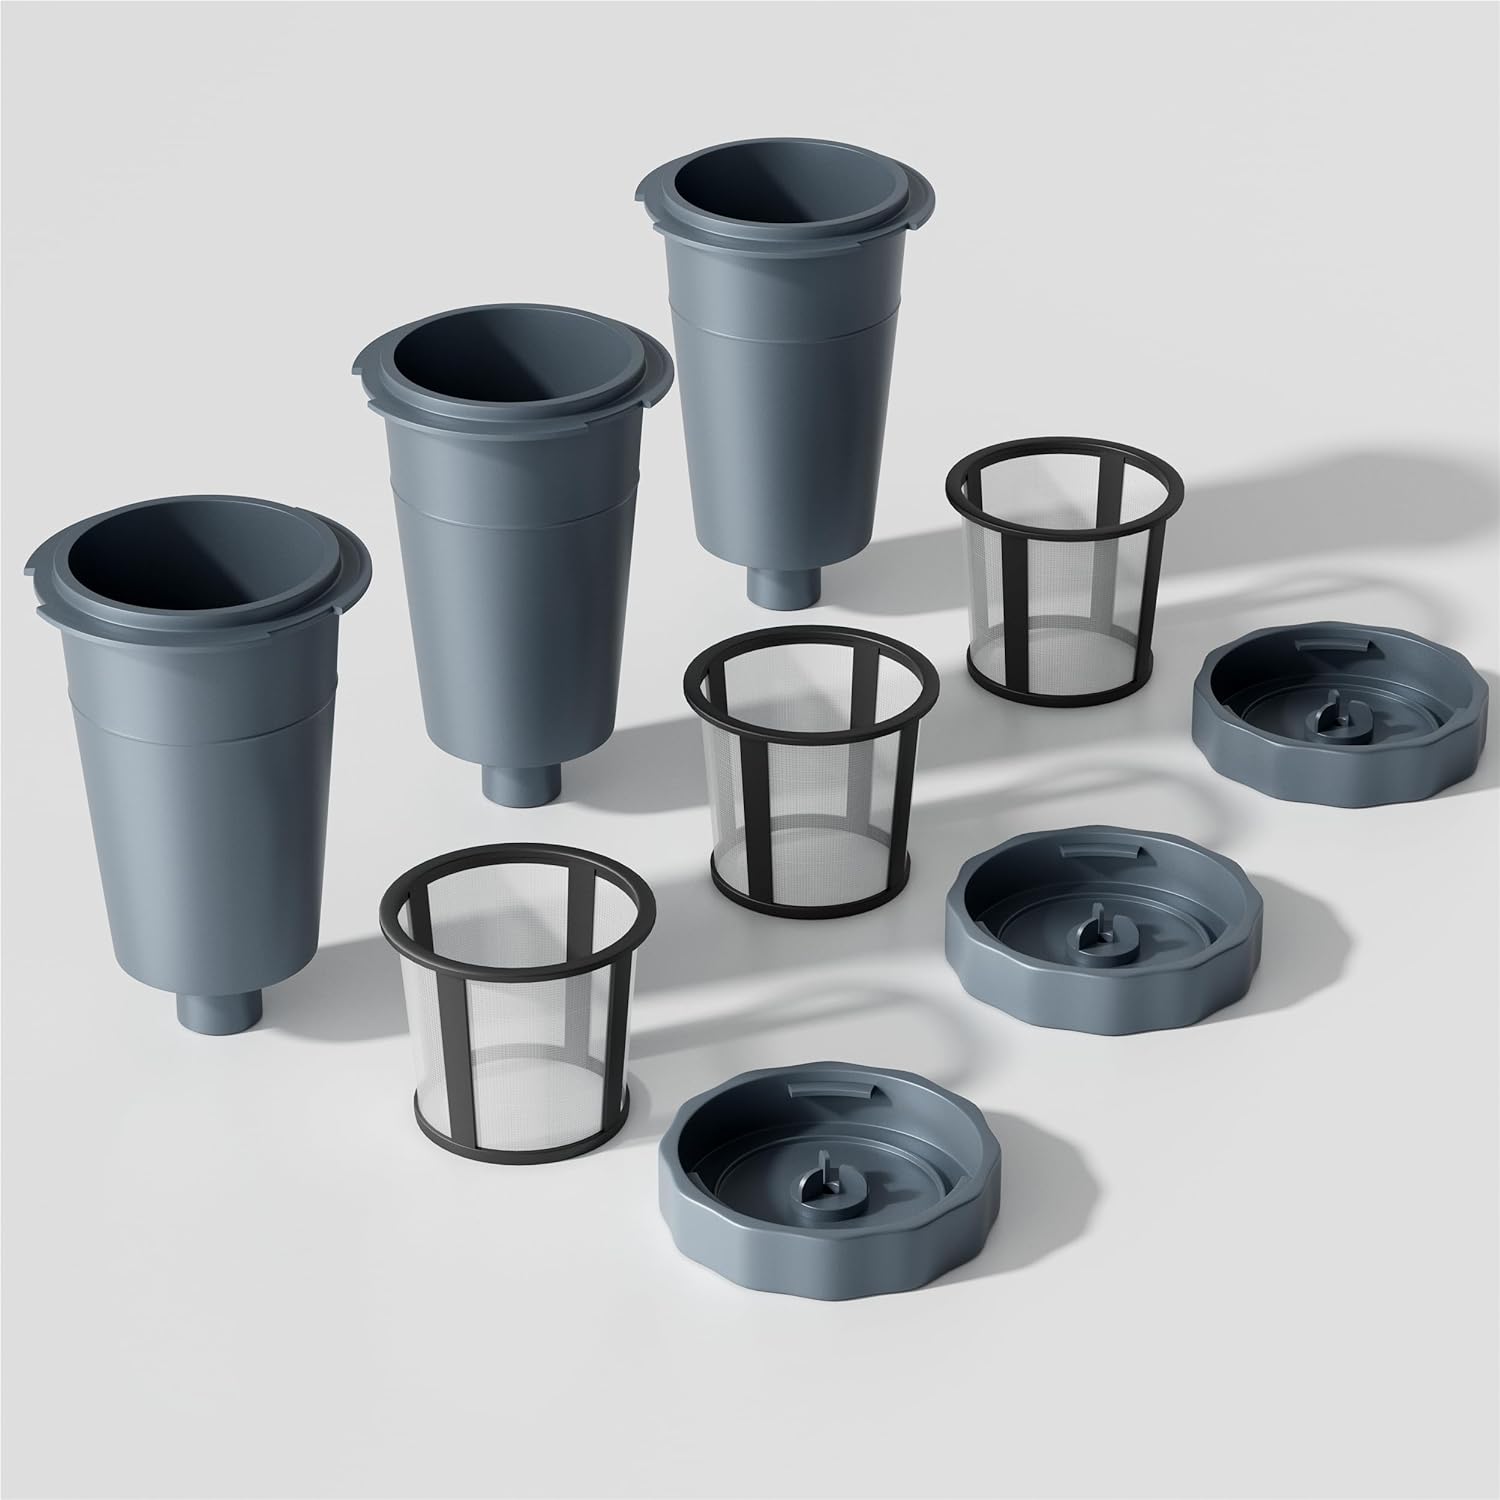 Reusable K Cup for Keuring,BPA-Free Reusable Filter Cup Compatible with B30 B40 B50 B60 B70 K10 MINI Plus K15 K40/45 K55 K60/65 K70/75/79 series 5048 Old Mode Grey